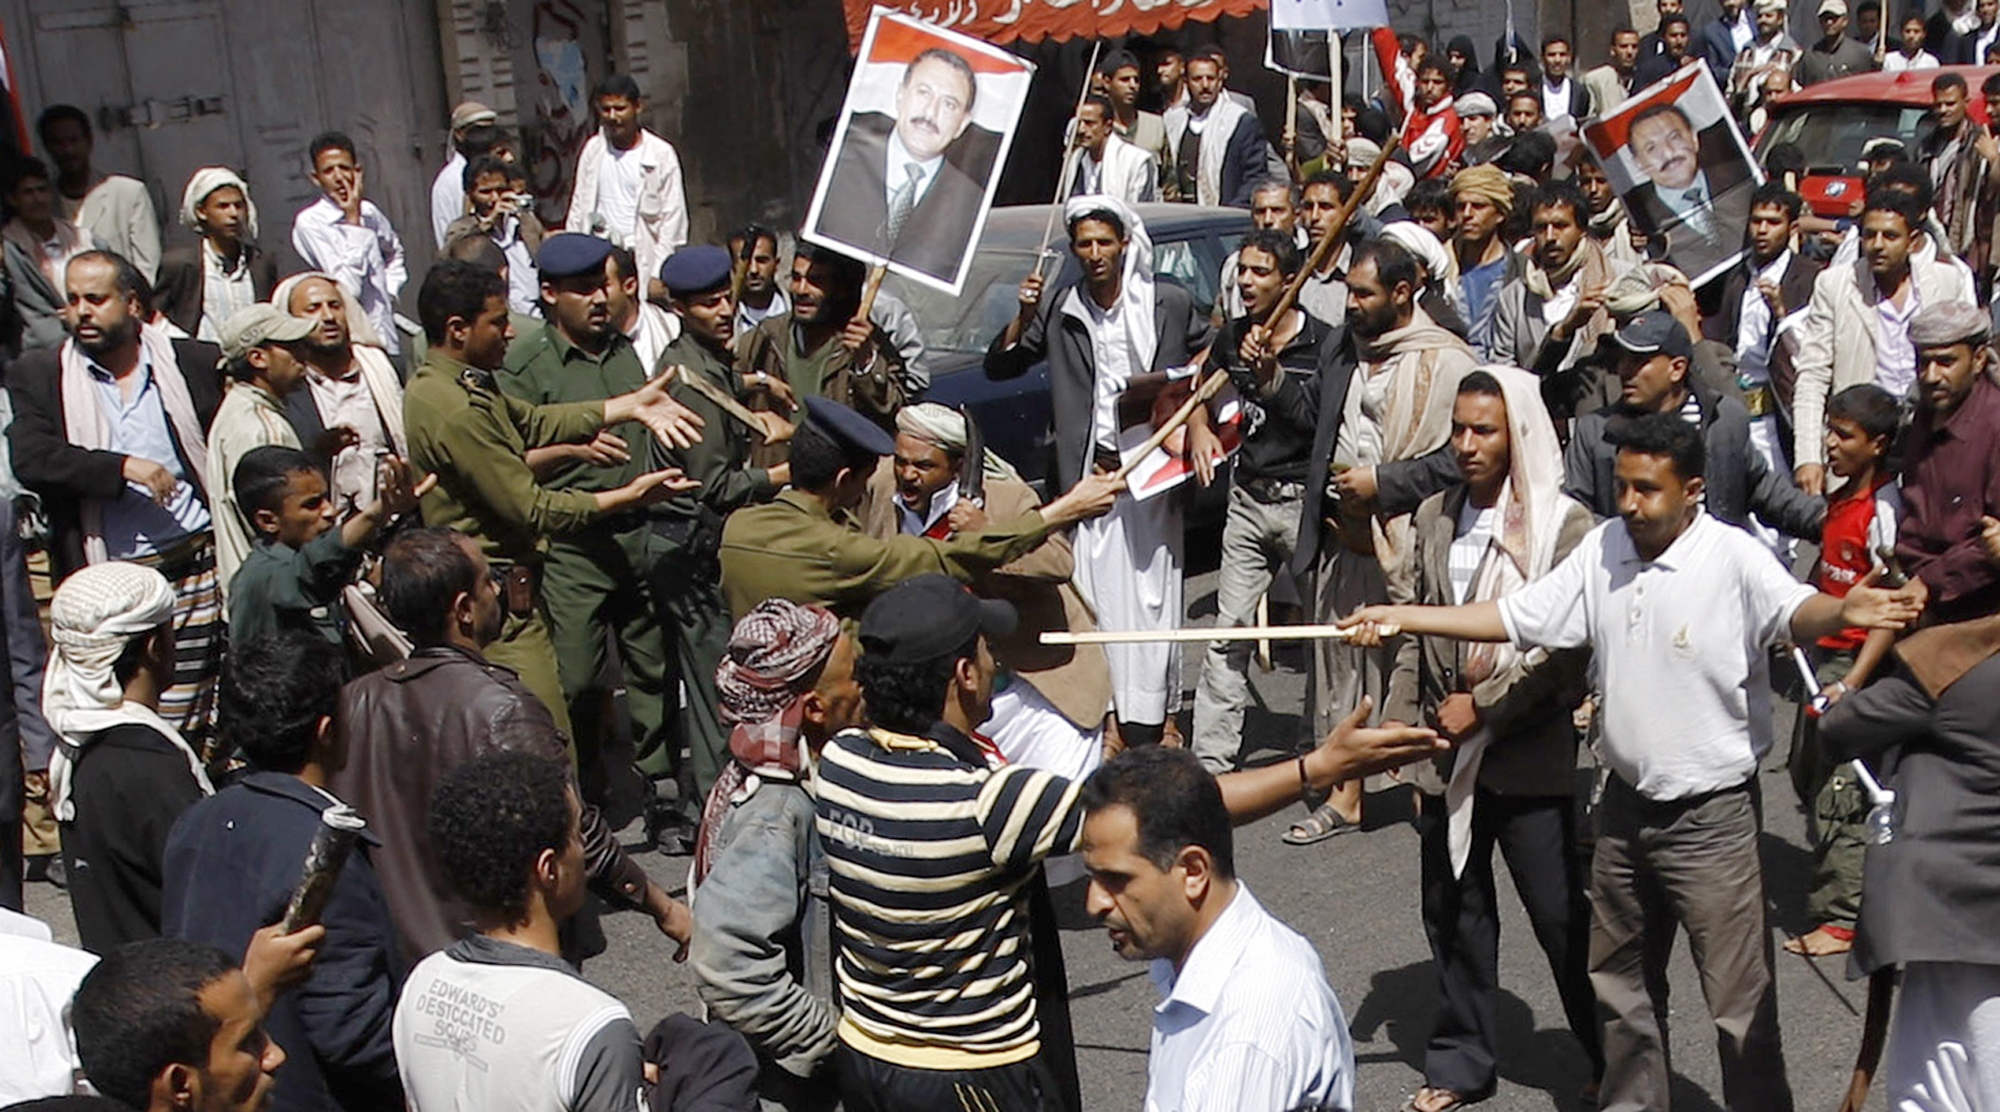 Uppror, Demonstration, Mellanöstern, Jemen, Tunisien